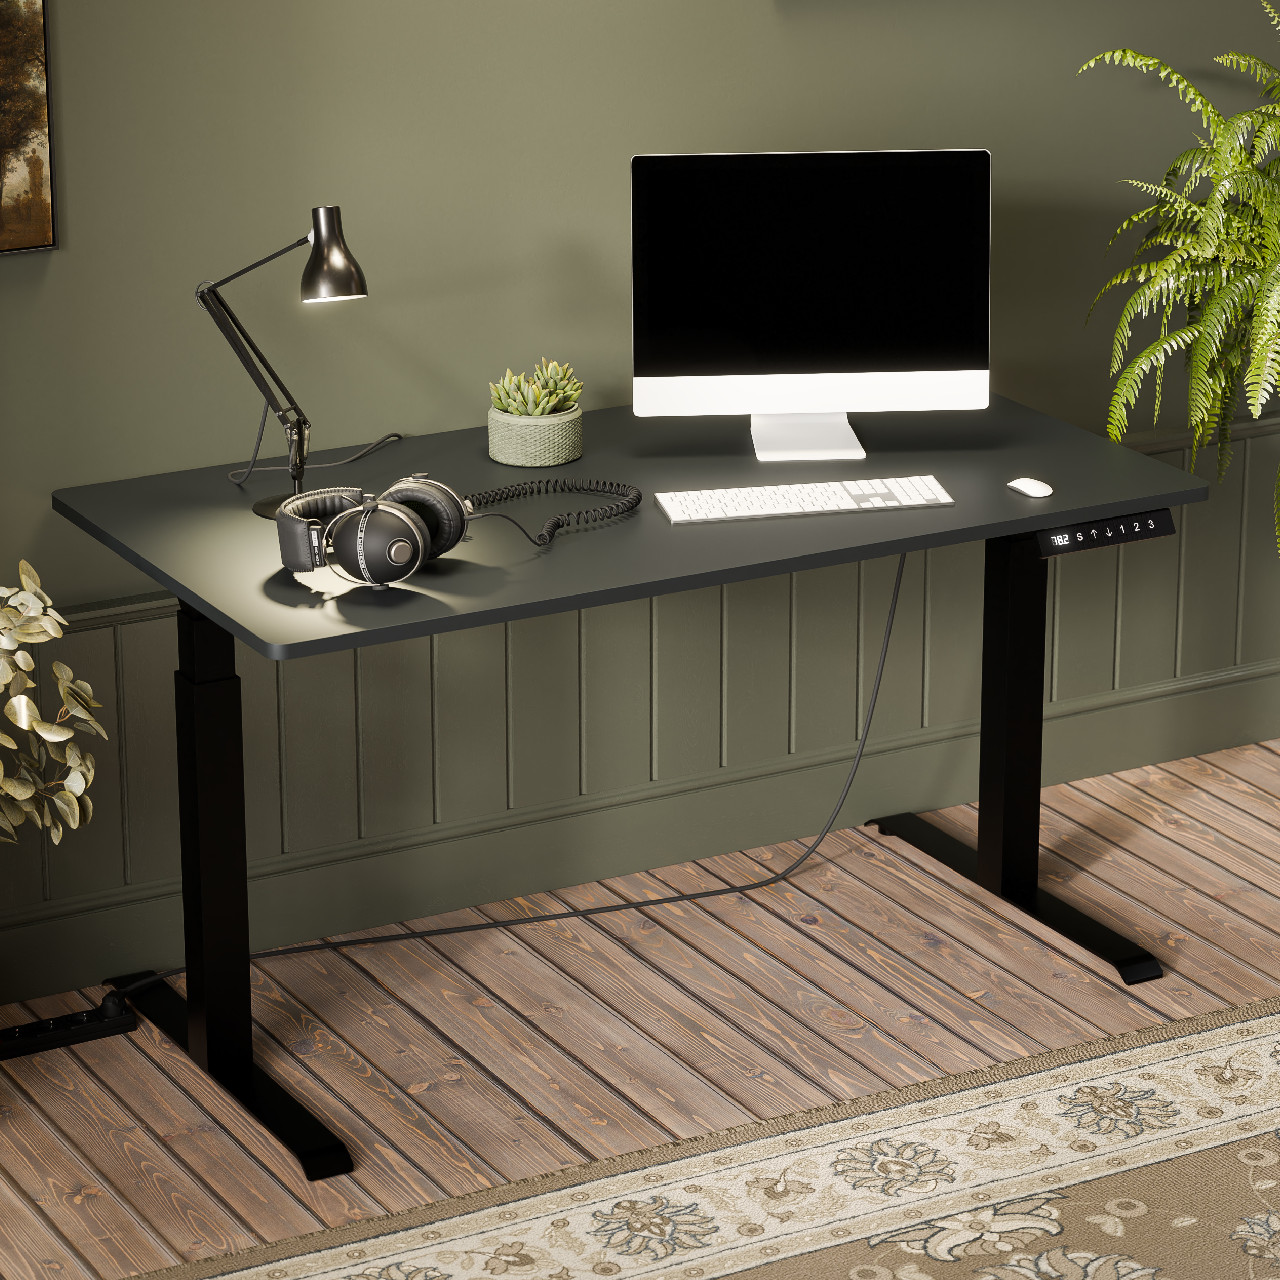 Height adjustable standing desks MOON LONG black / anthracite